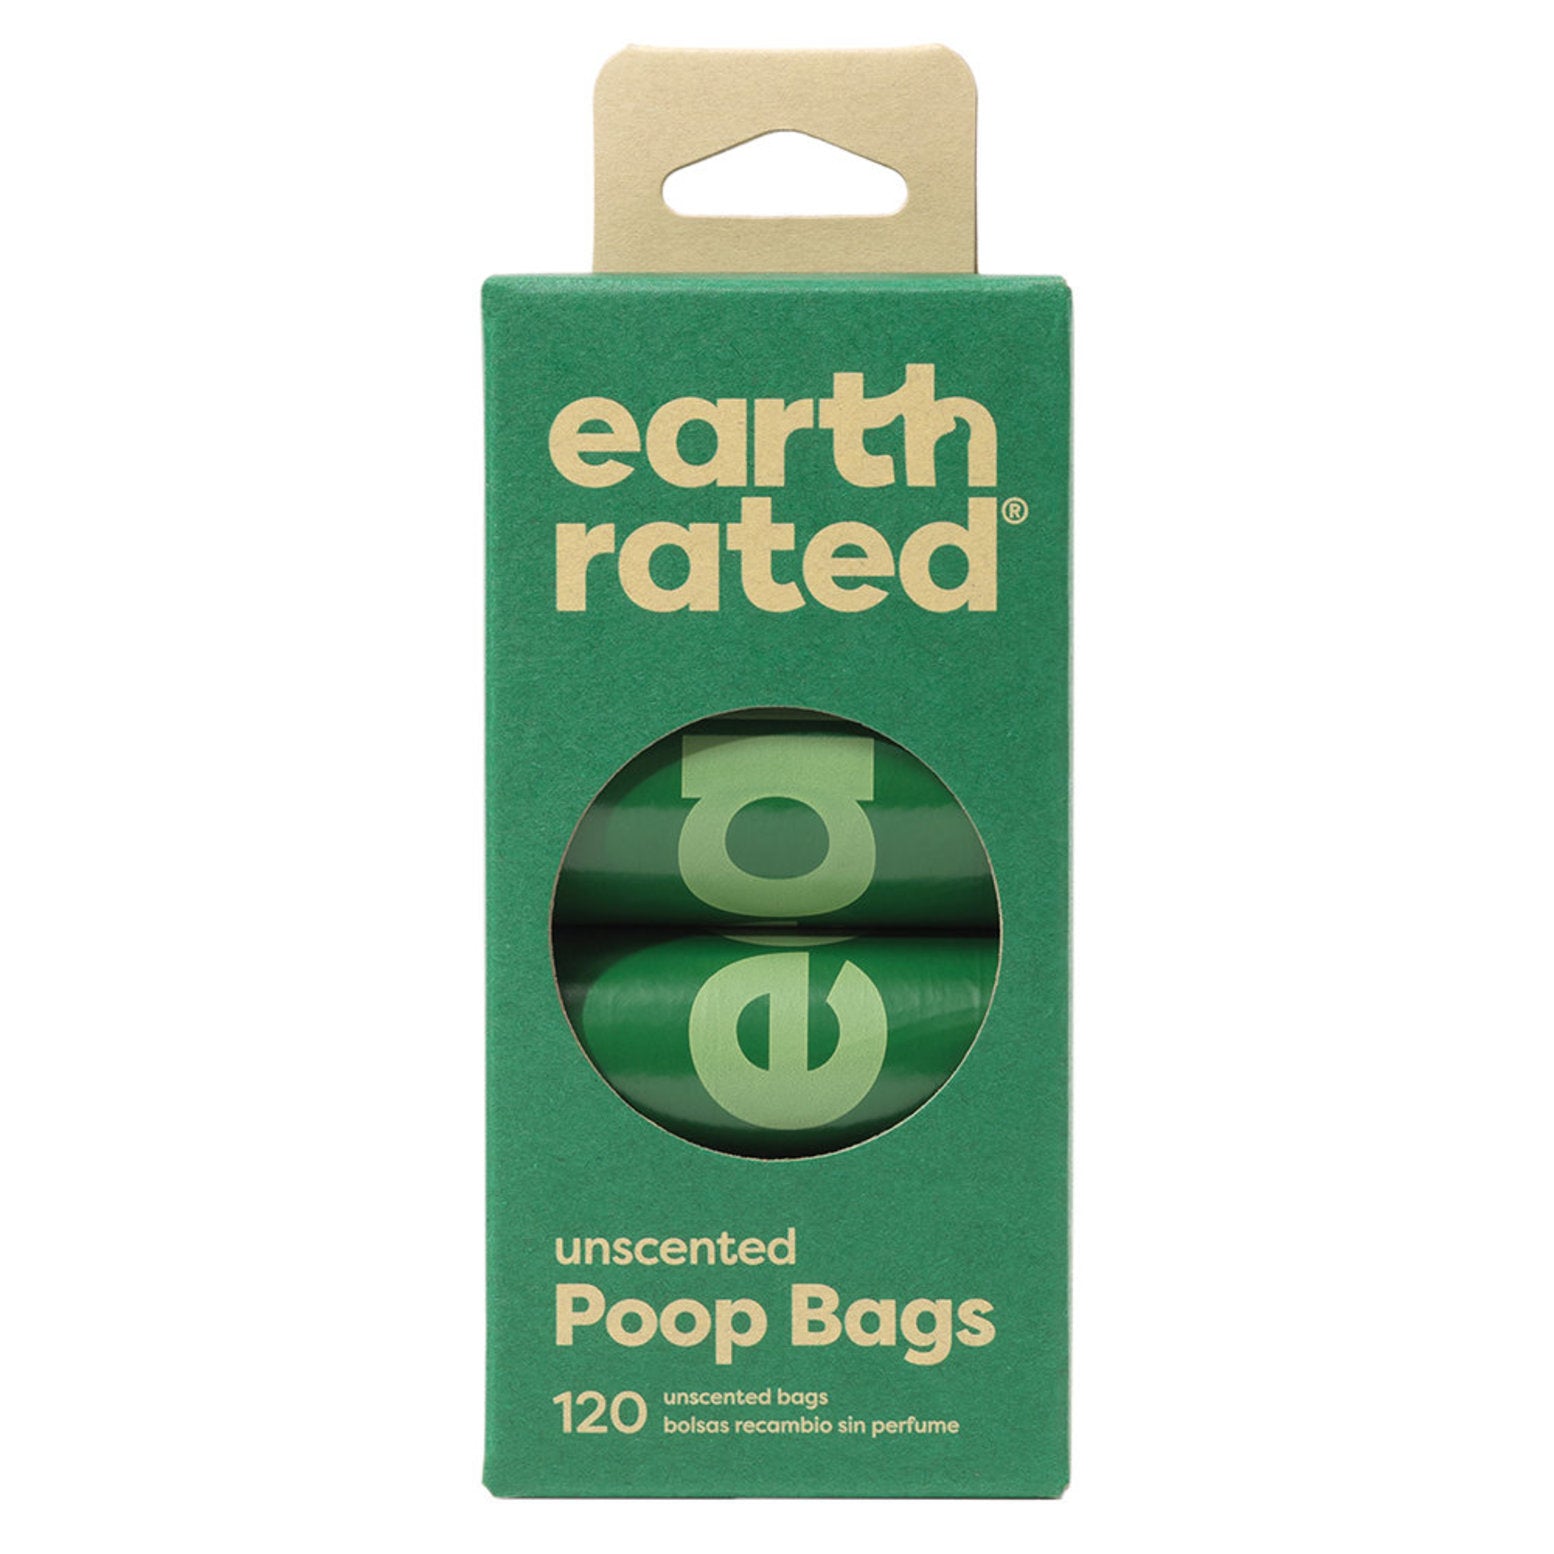 Earth Rated Eco-Friendly Poop Bags, 100% Leak-Proof, 120 Bags (8 Rolls)